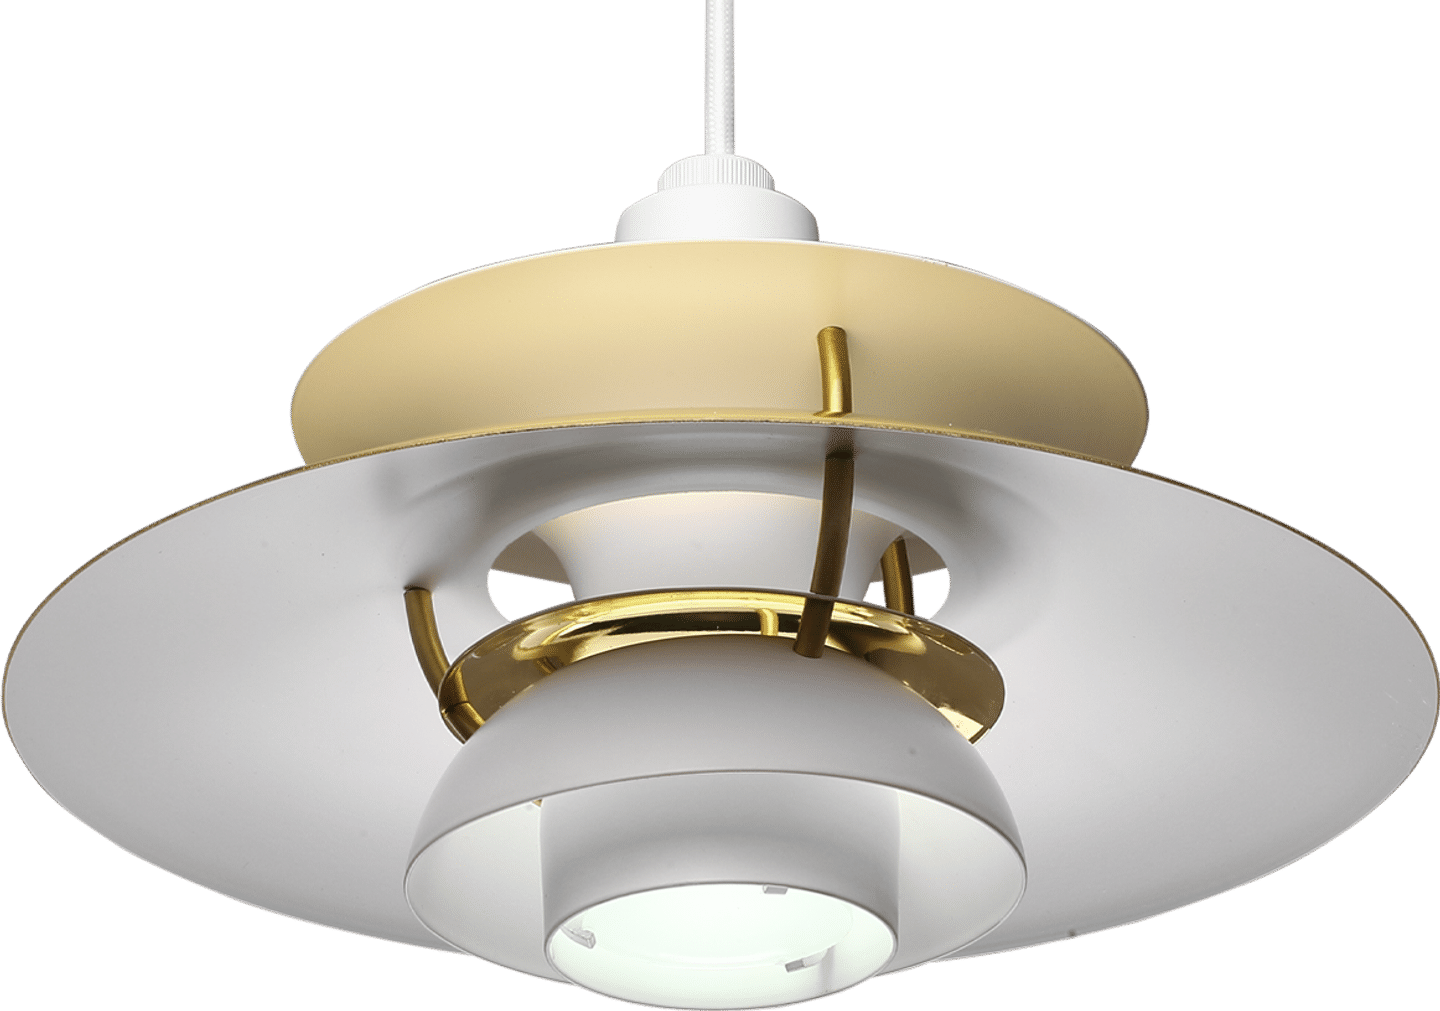 Lampe suspendue PH 5 - Mini White N Brass image.